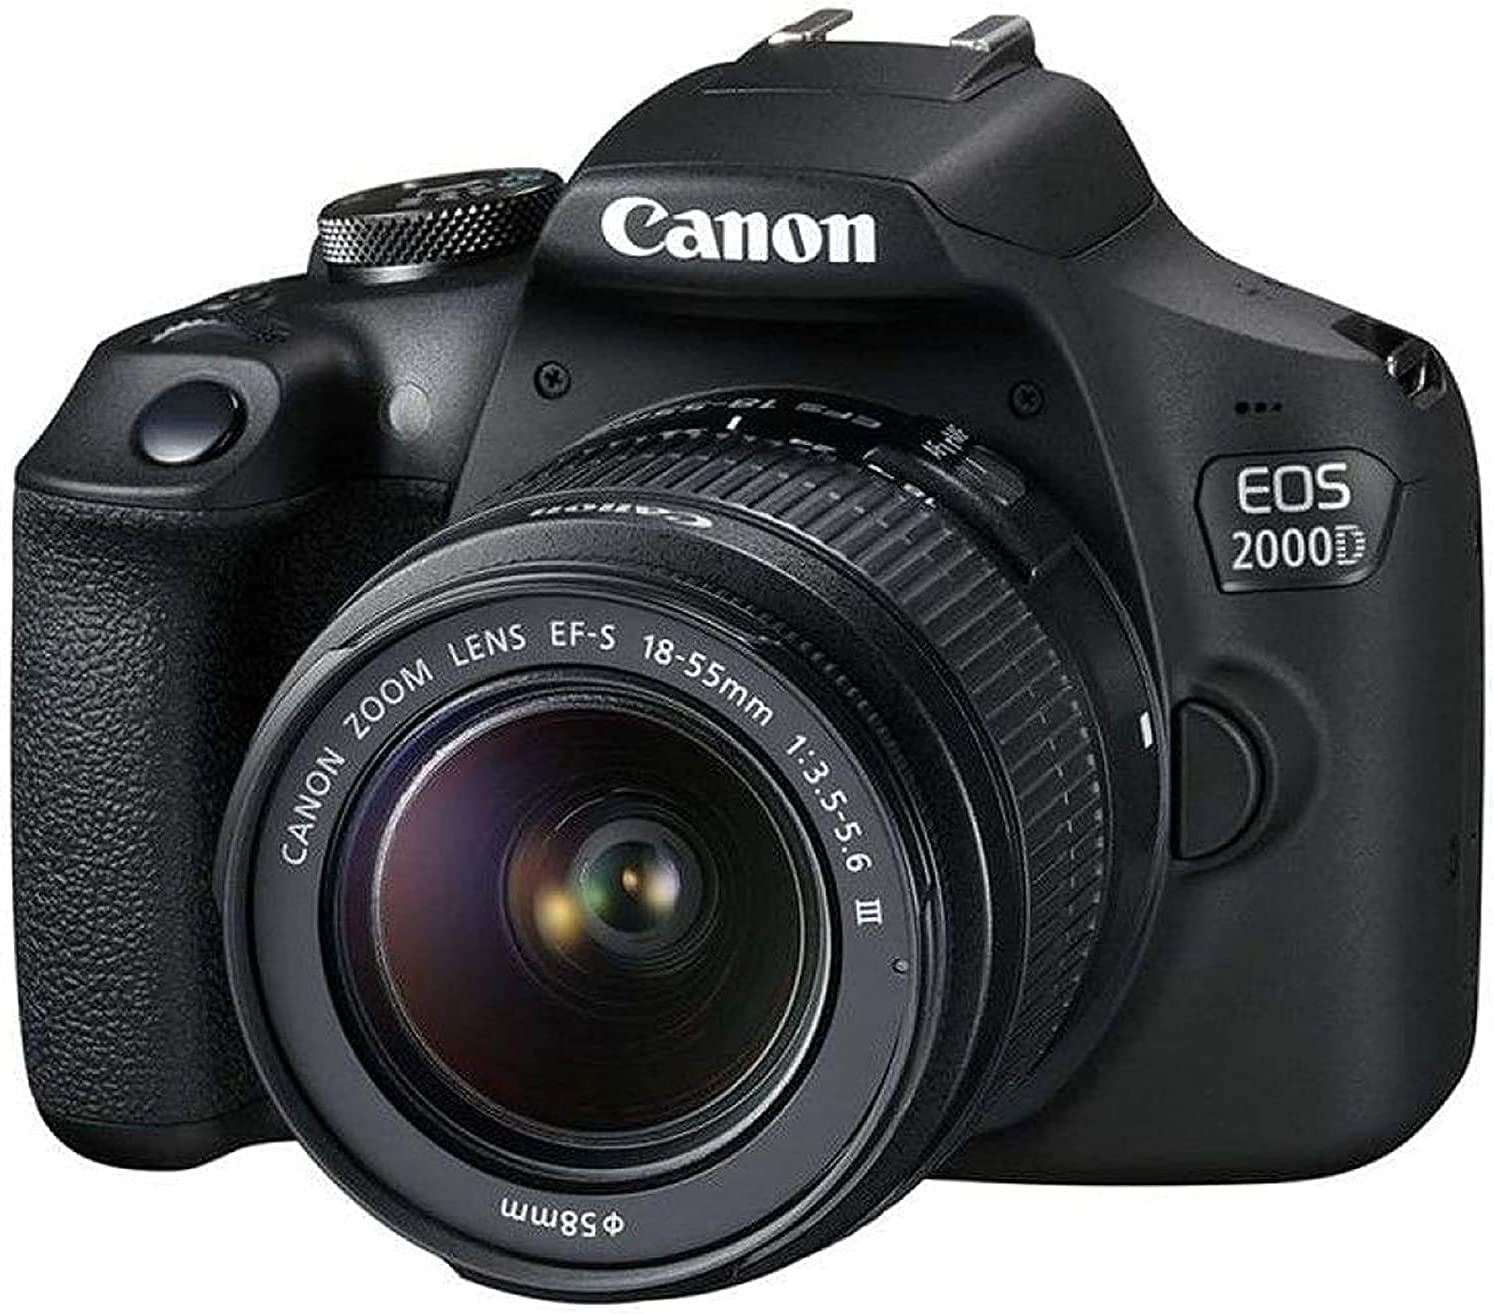 Canon EOS 2000D Digital SLR Camera with 18-55mm III Lens Kit (Black) + Premium Accessories Bundle (International Version) - image 3 of 3